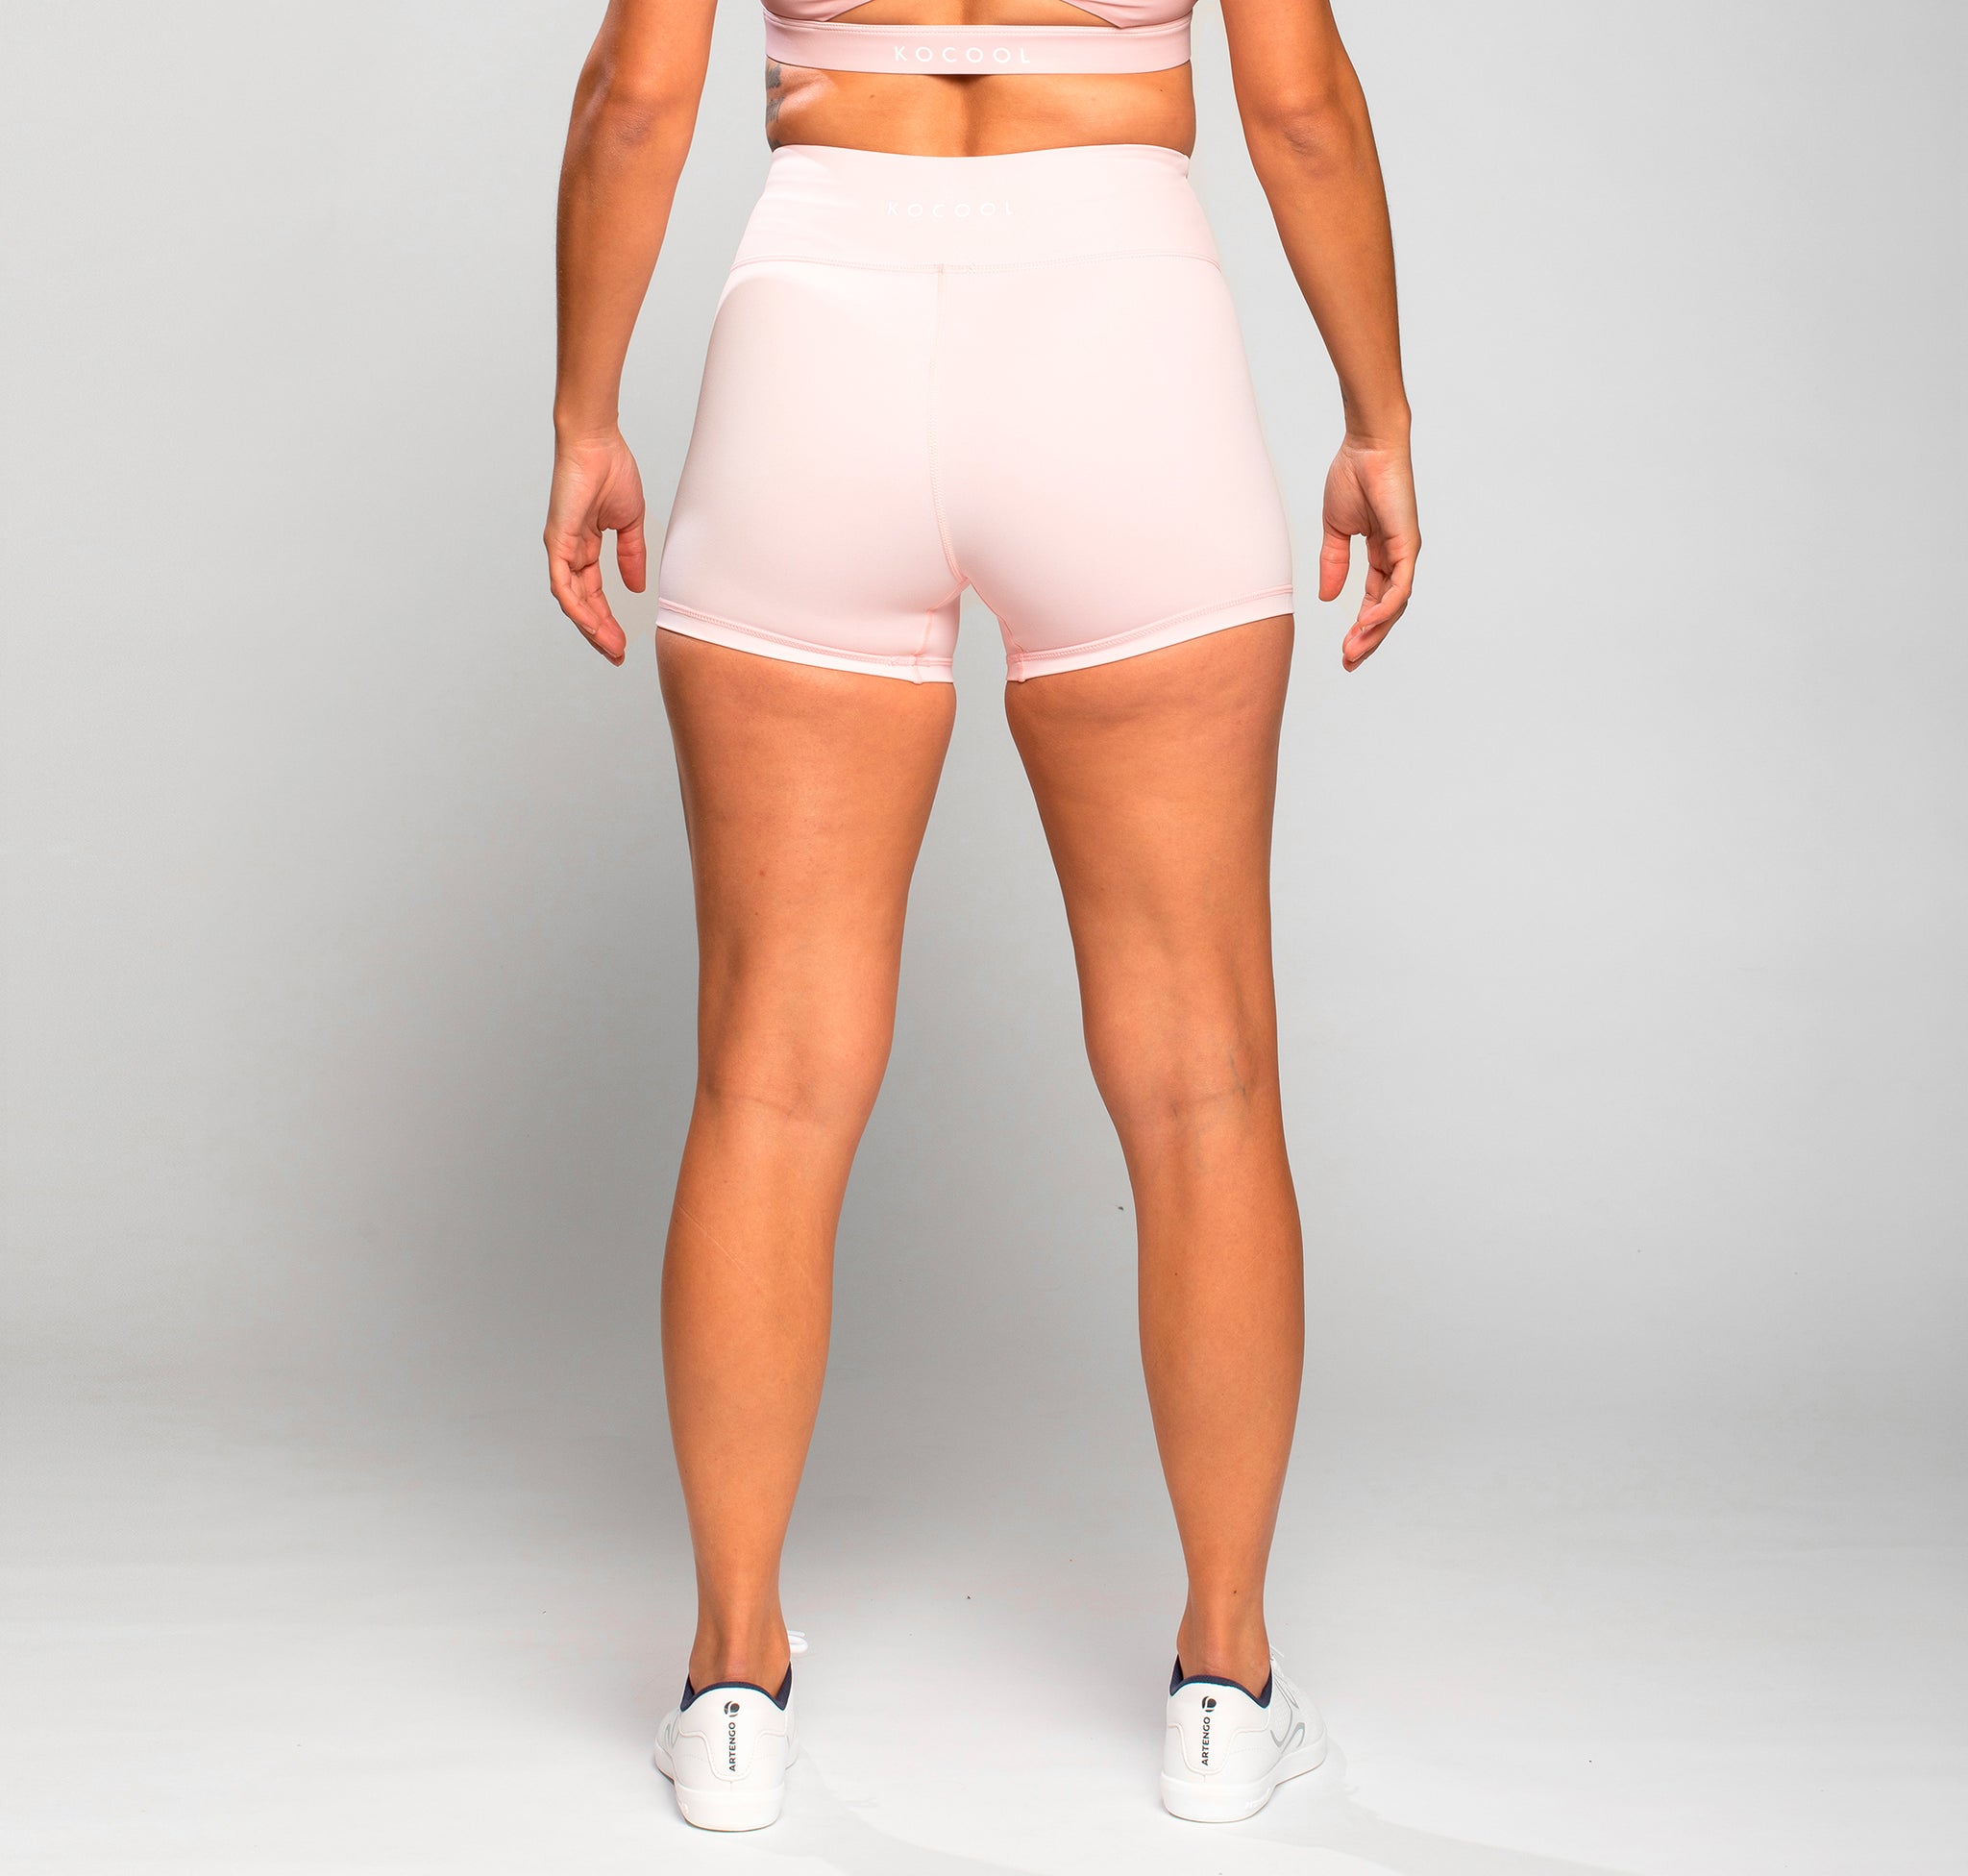 Gladiadora Booty Shorts - Pale Pink